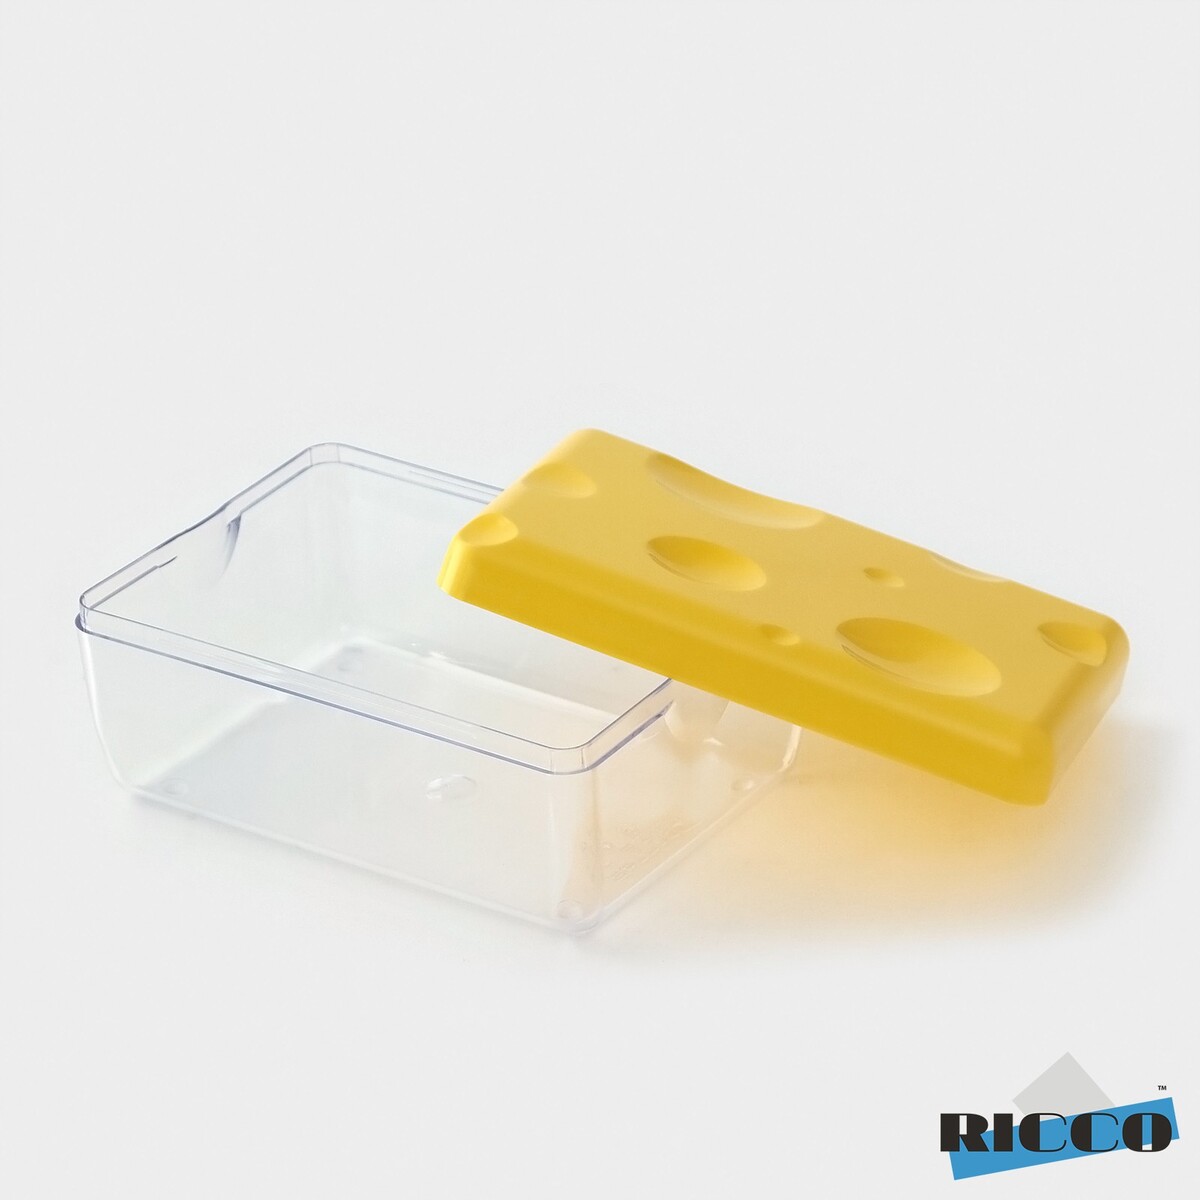 Контейнер для сыра ricco, 16×11×7см, цвет желтый контейнер для сыра ricco 16×11×7см желтый